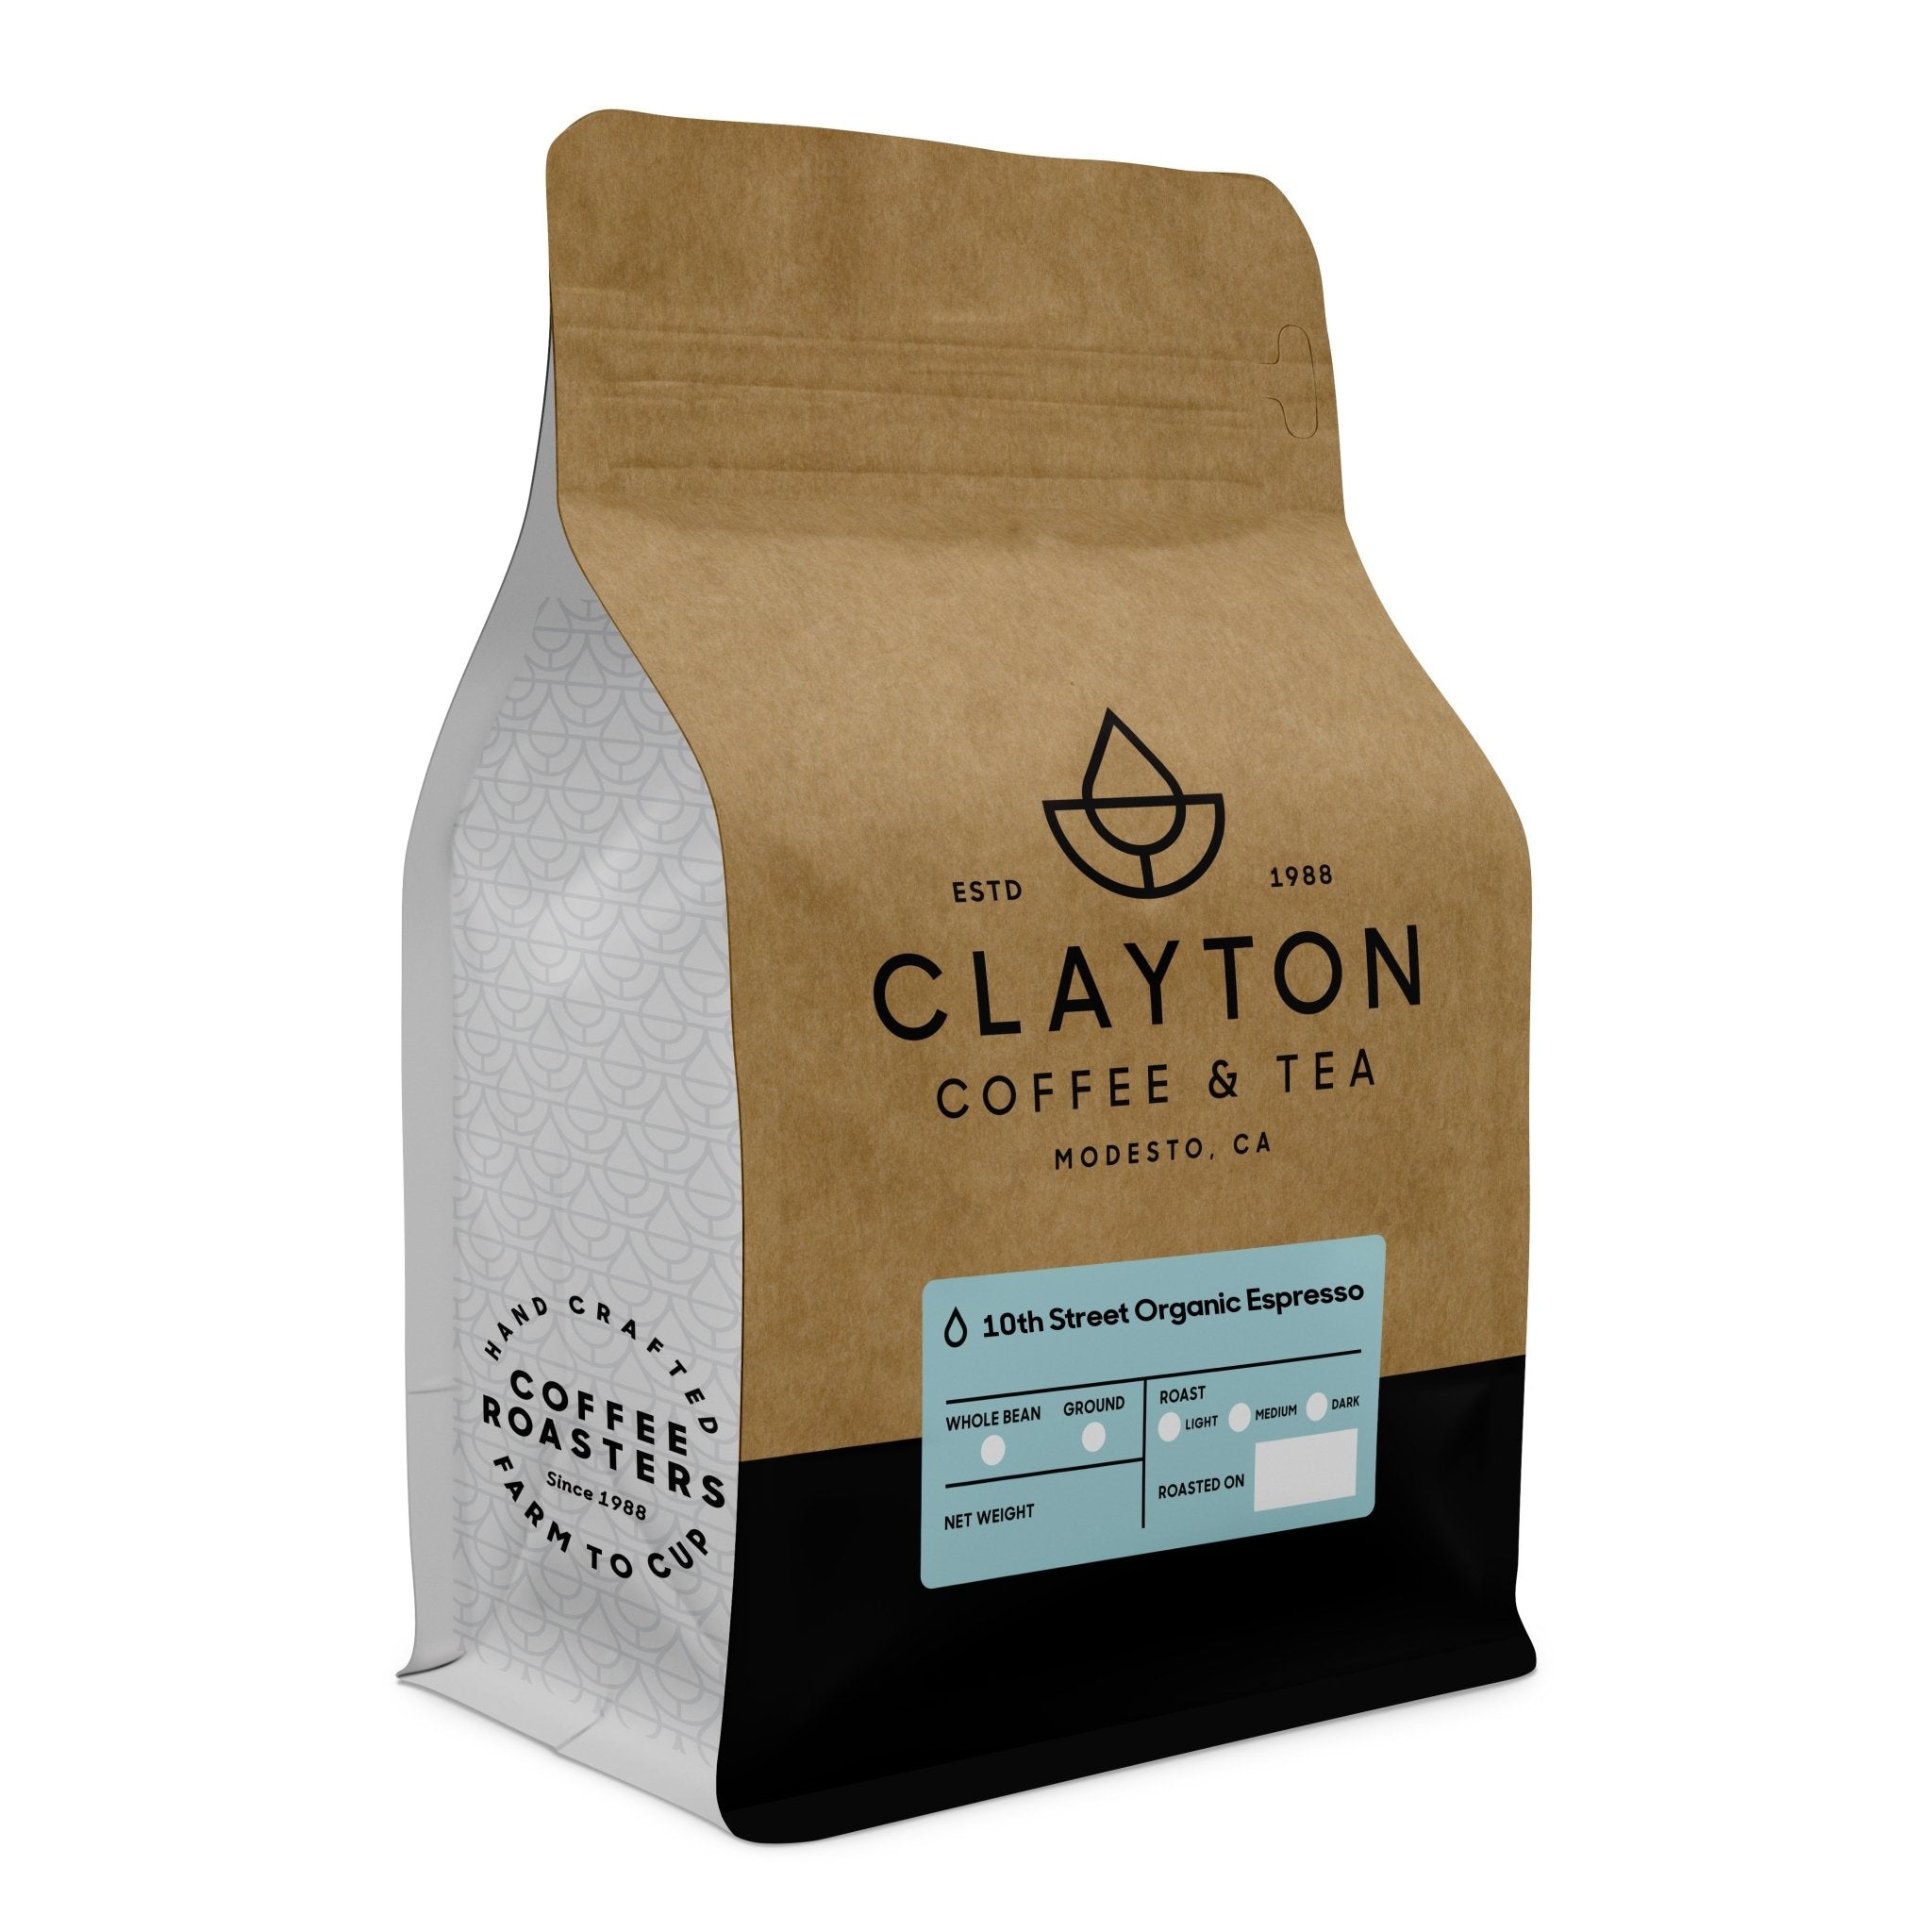 10th Street Organic Espresso - Clayton Coffee & Tea